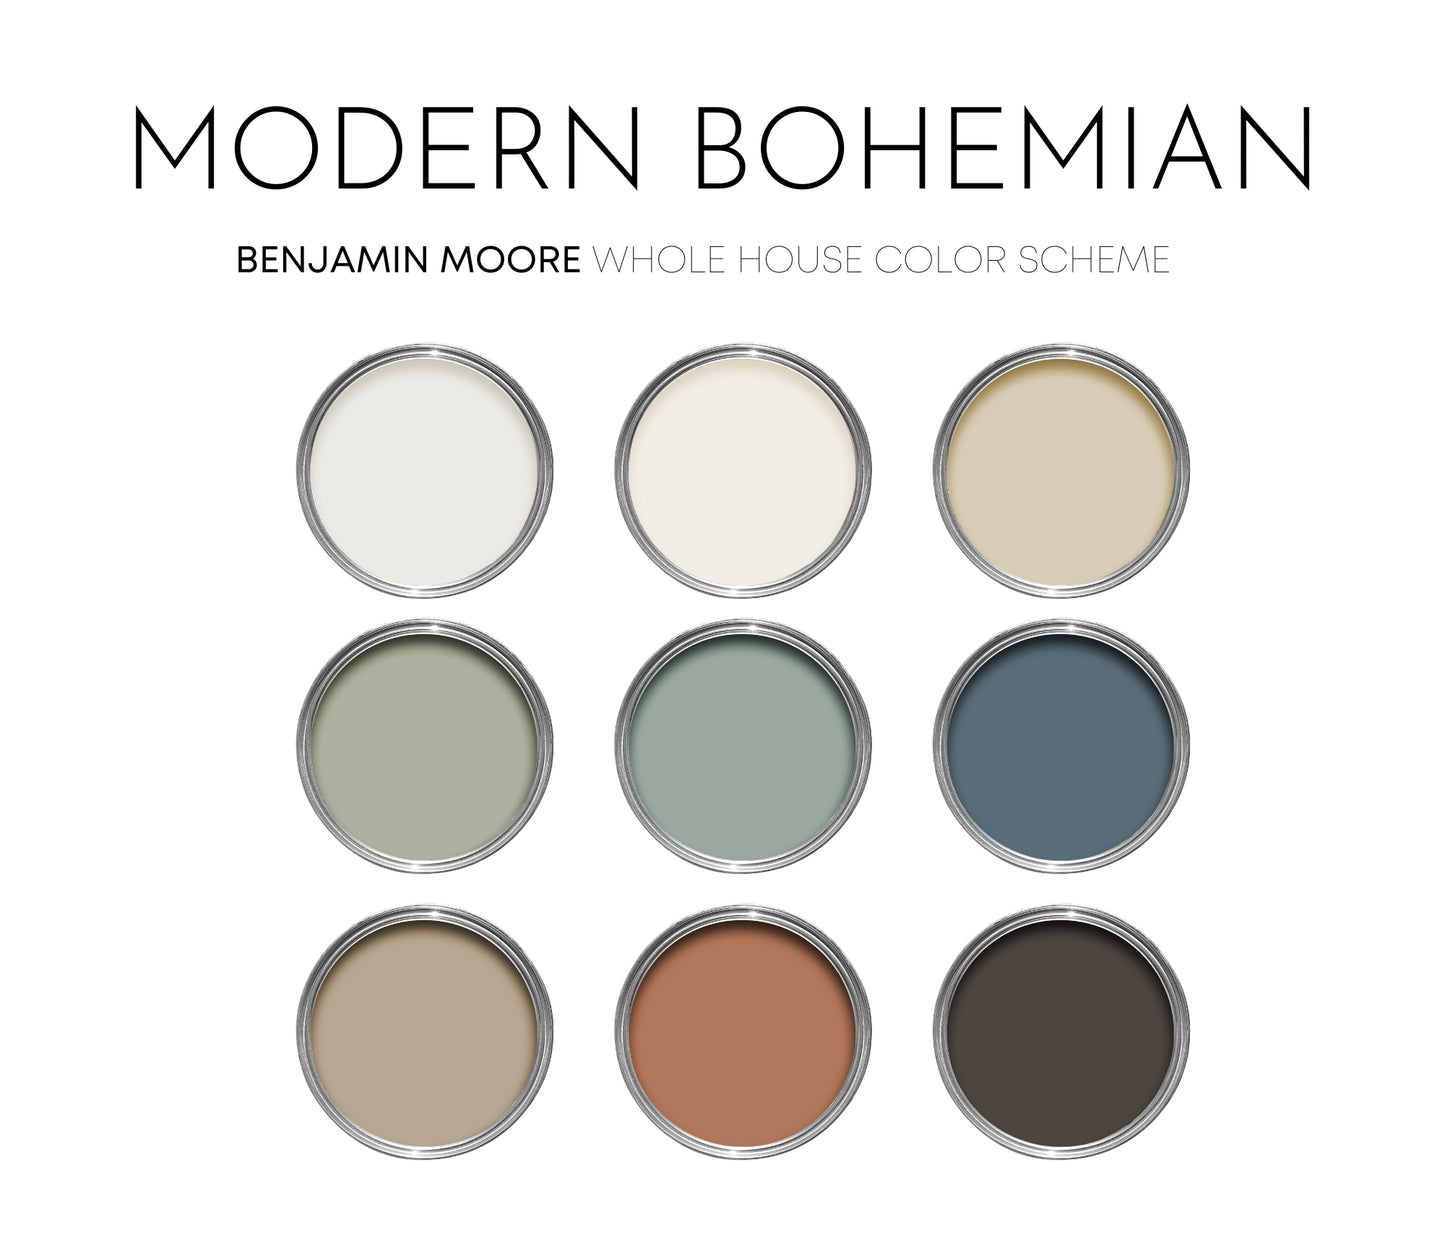 Modern Bohemian Benjamin Moore Paint Palette, Warm Neutrals, Moody Interior Paint Colors, Boho Color Palette, Saybrook Sage